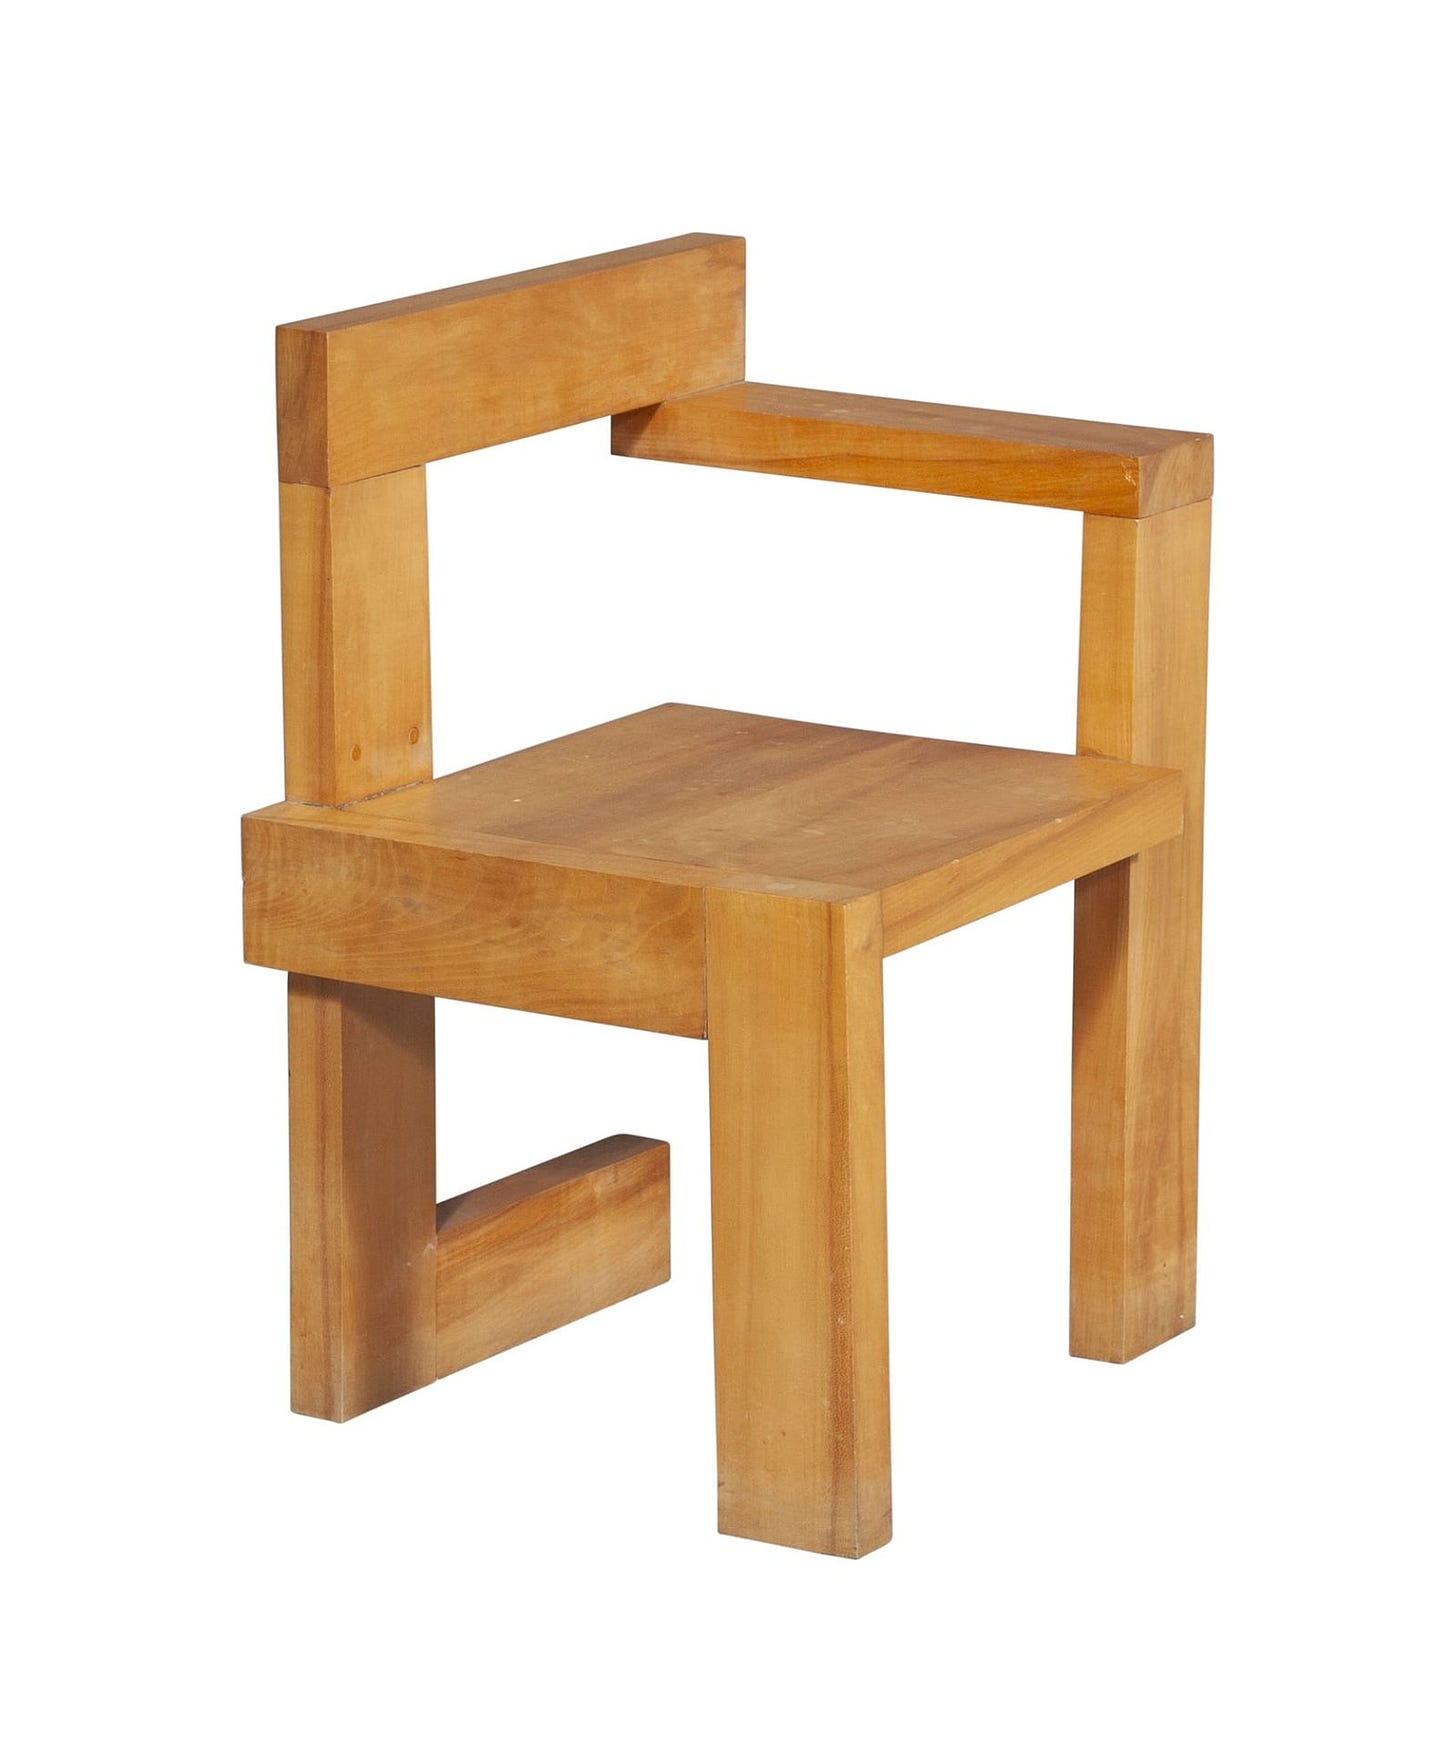 Gerrit Rietveld Maple 'Steltman' Chair Designed in 1963